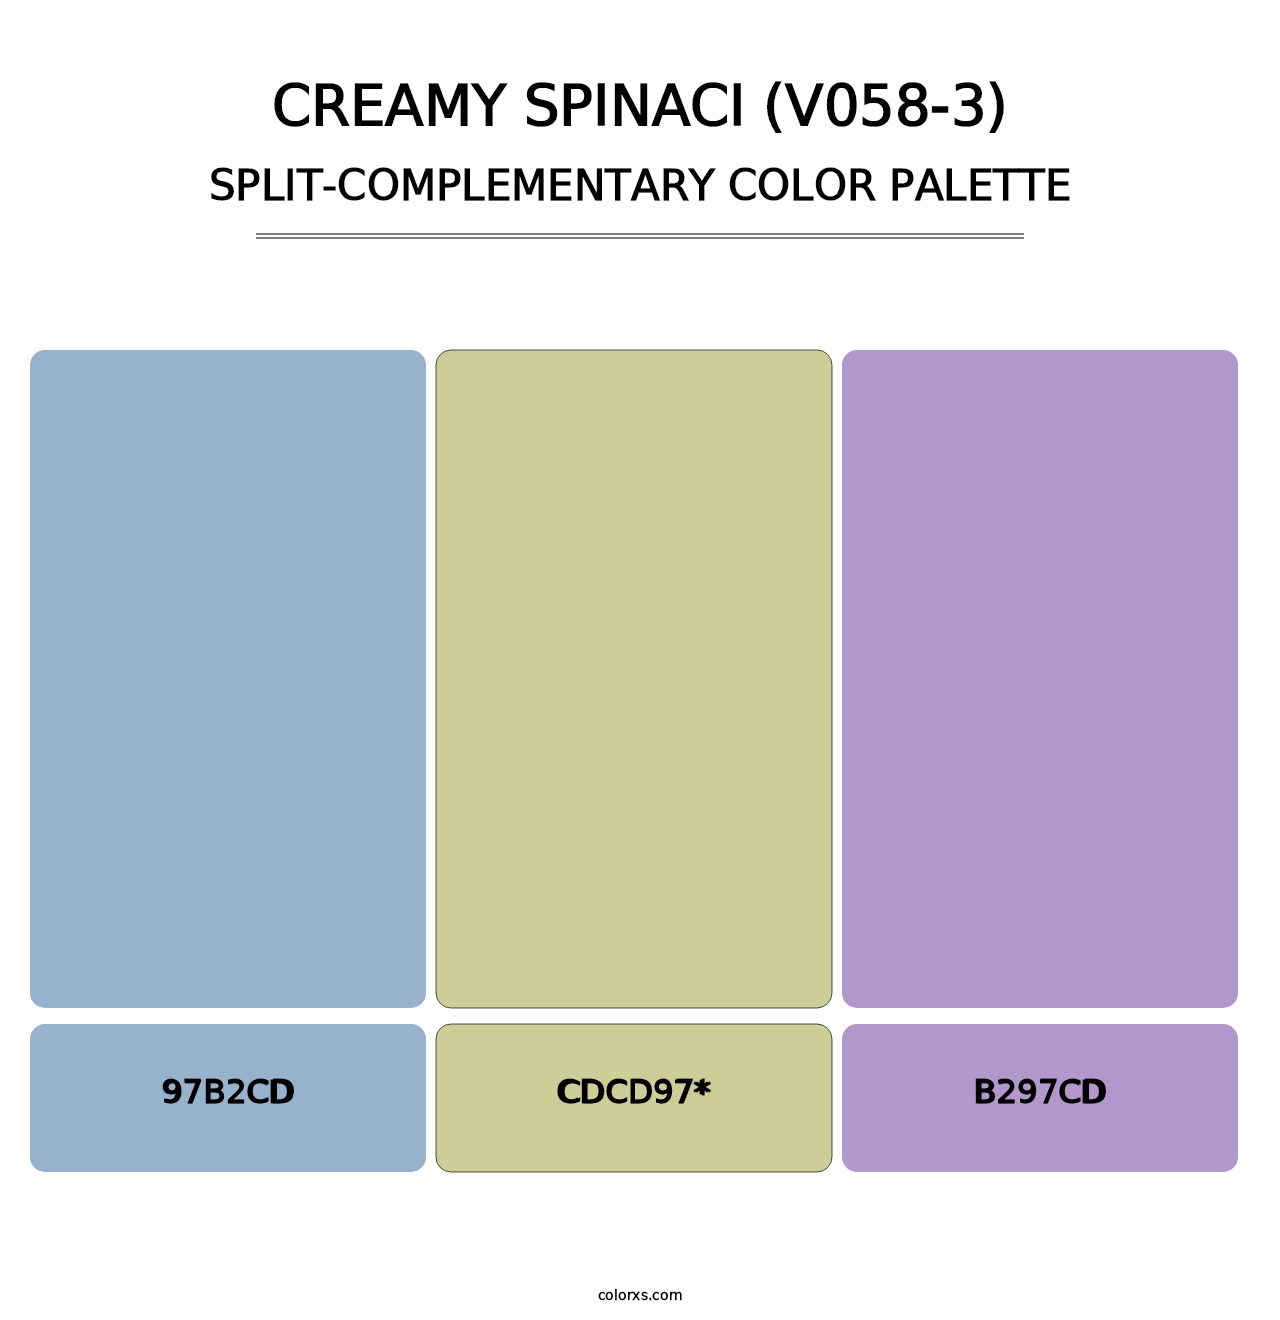 Creamy Spinaci (V058-3) - Split-Complementary Color Palette